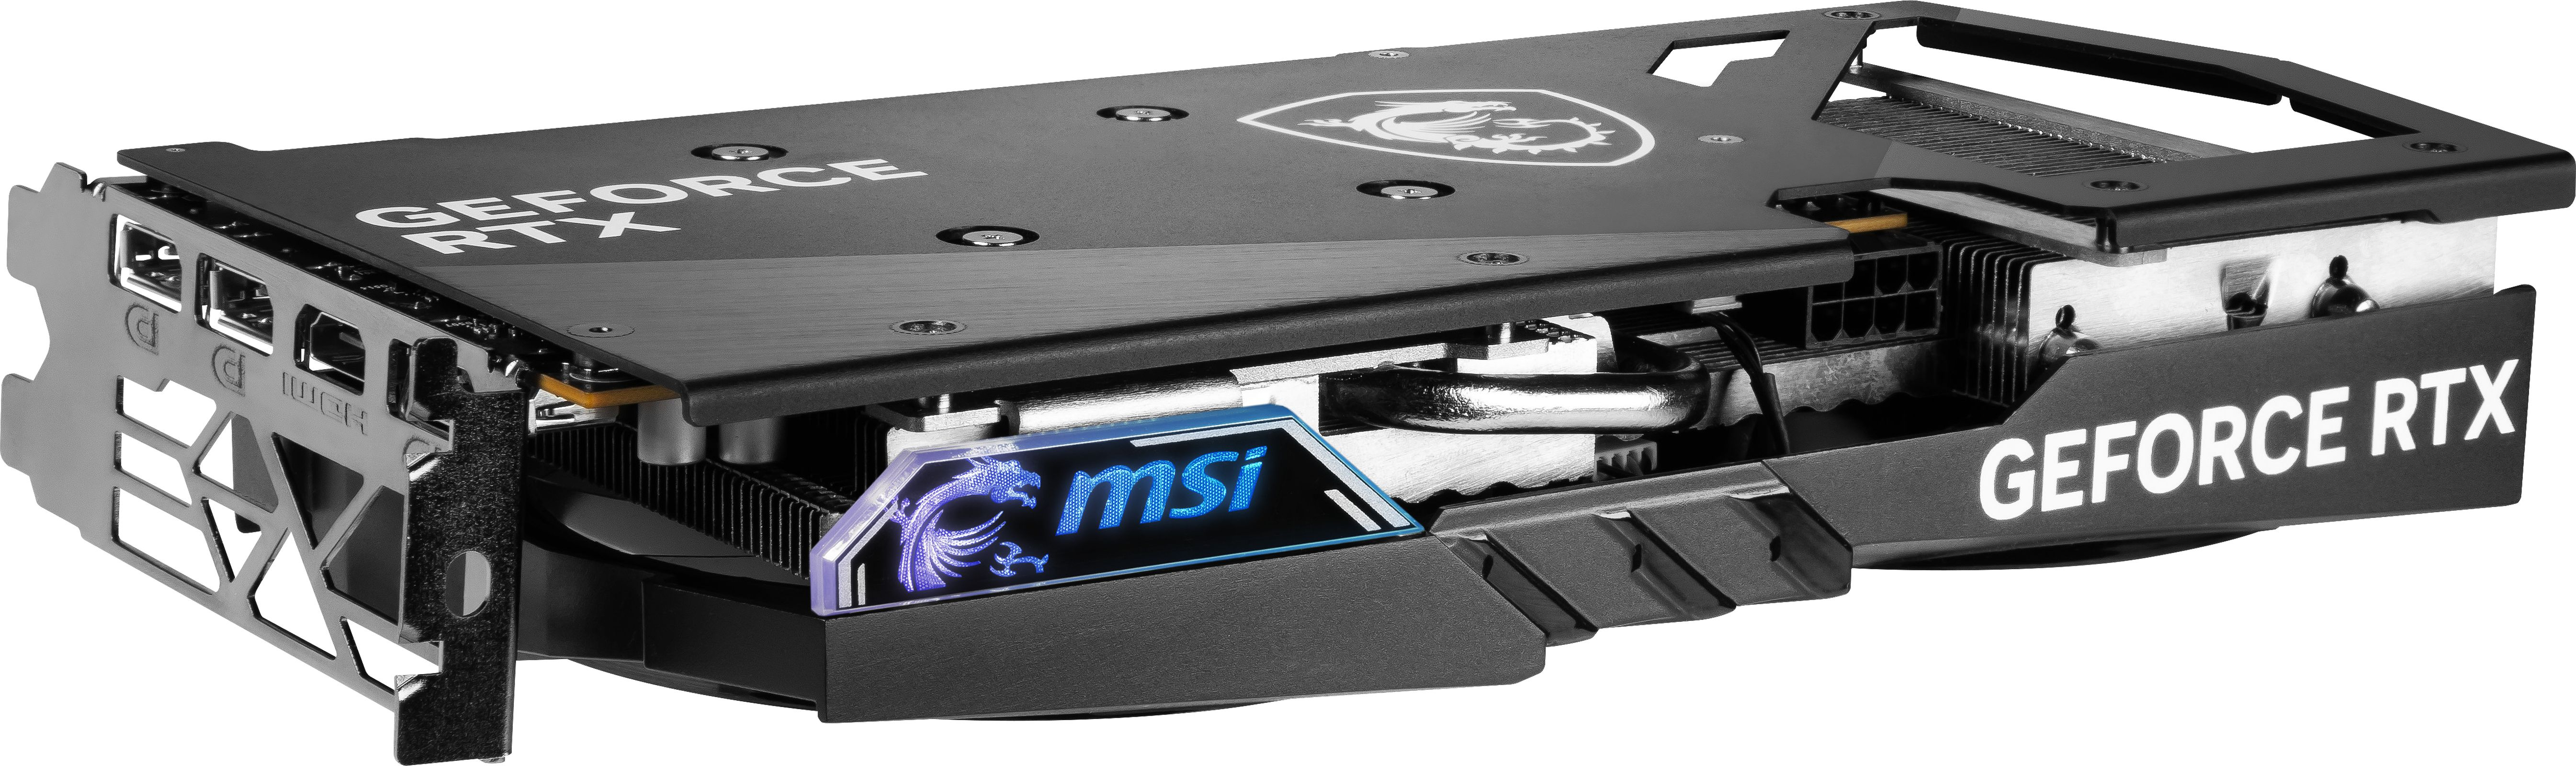 MSI GEFORCE RTX X 8G Grafikkarte) (NVIDIA, GAMING 4060